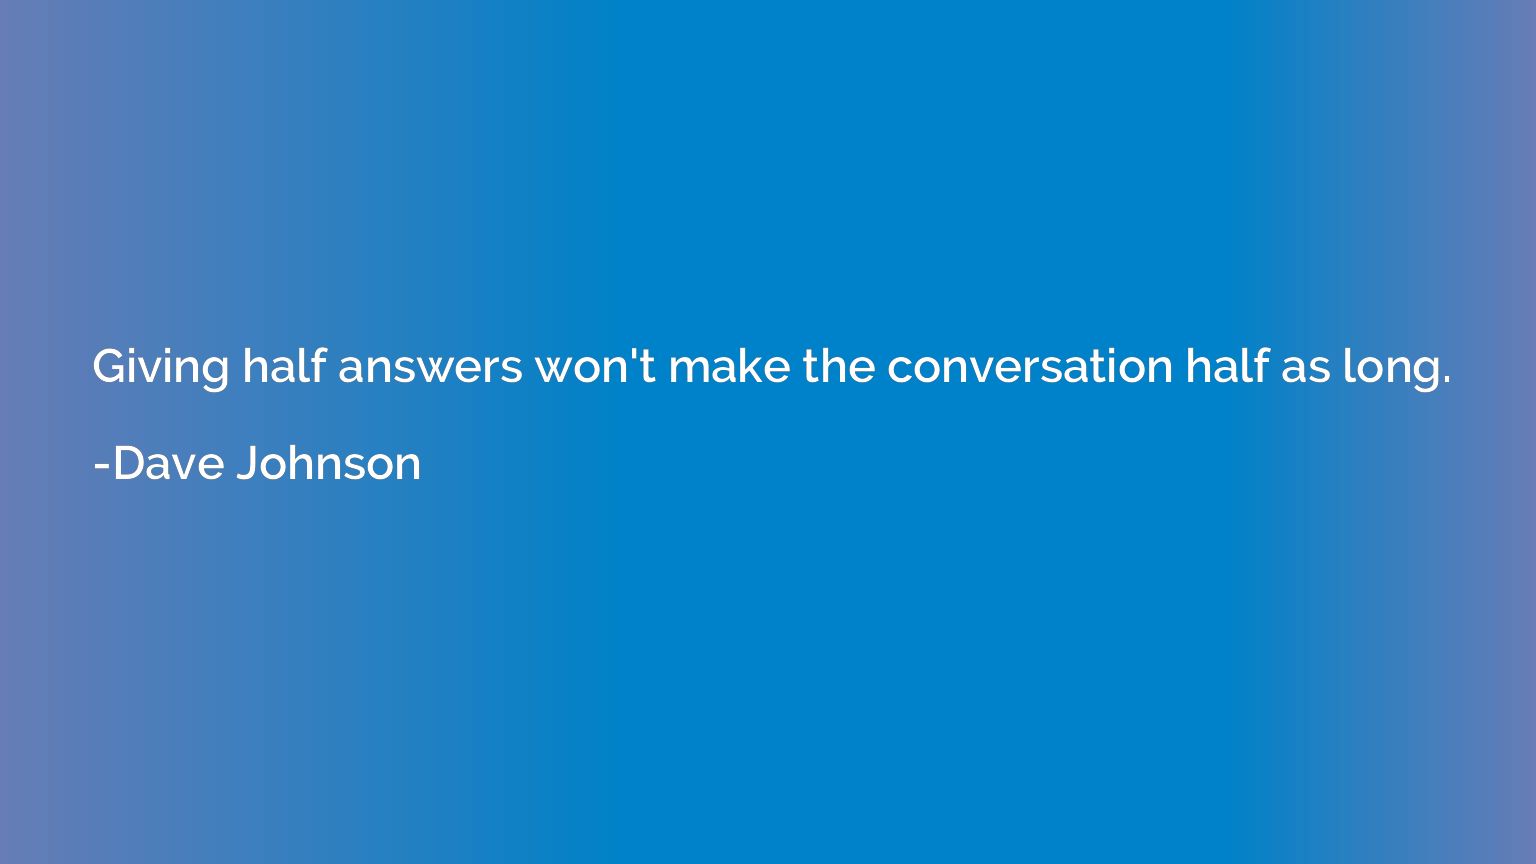 Giving half answers won't make the conversation half as long